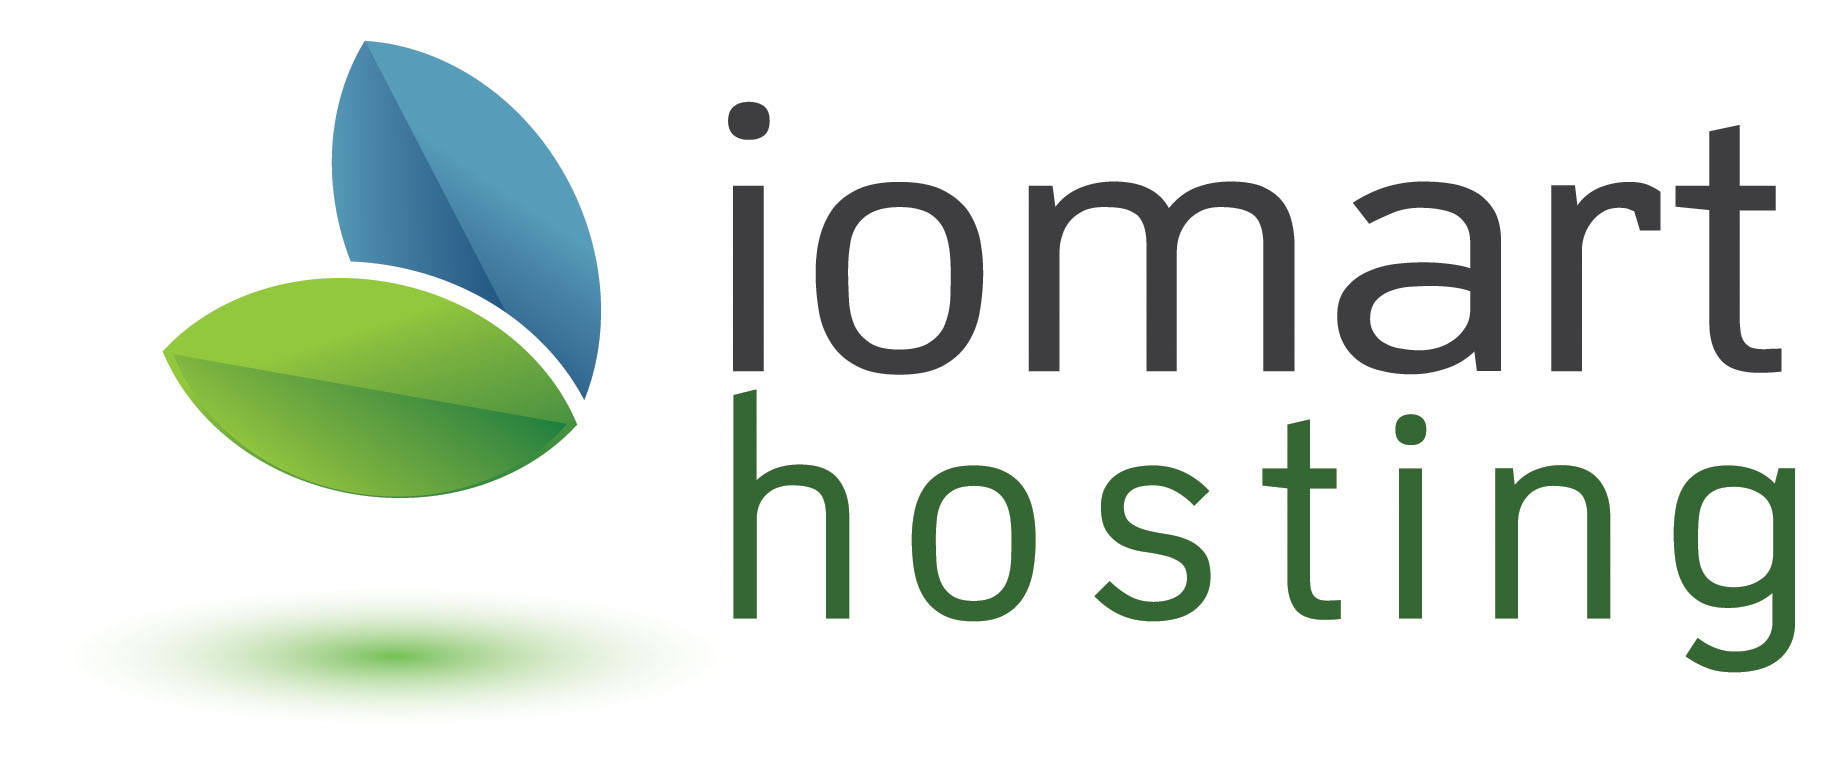 Scottish Web Host iomart